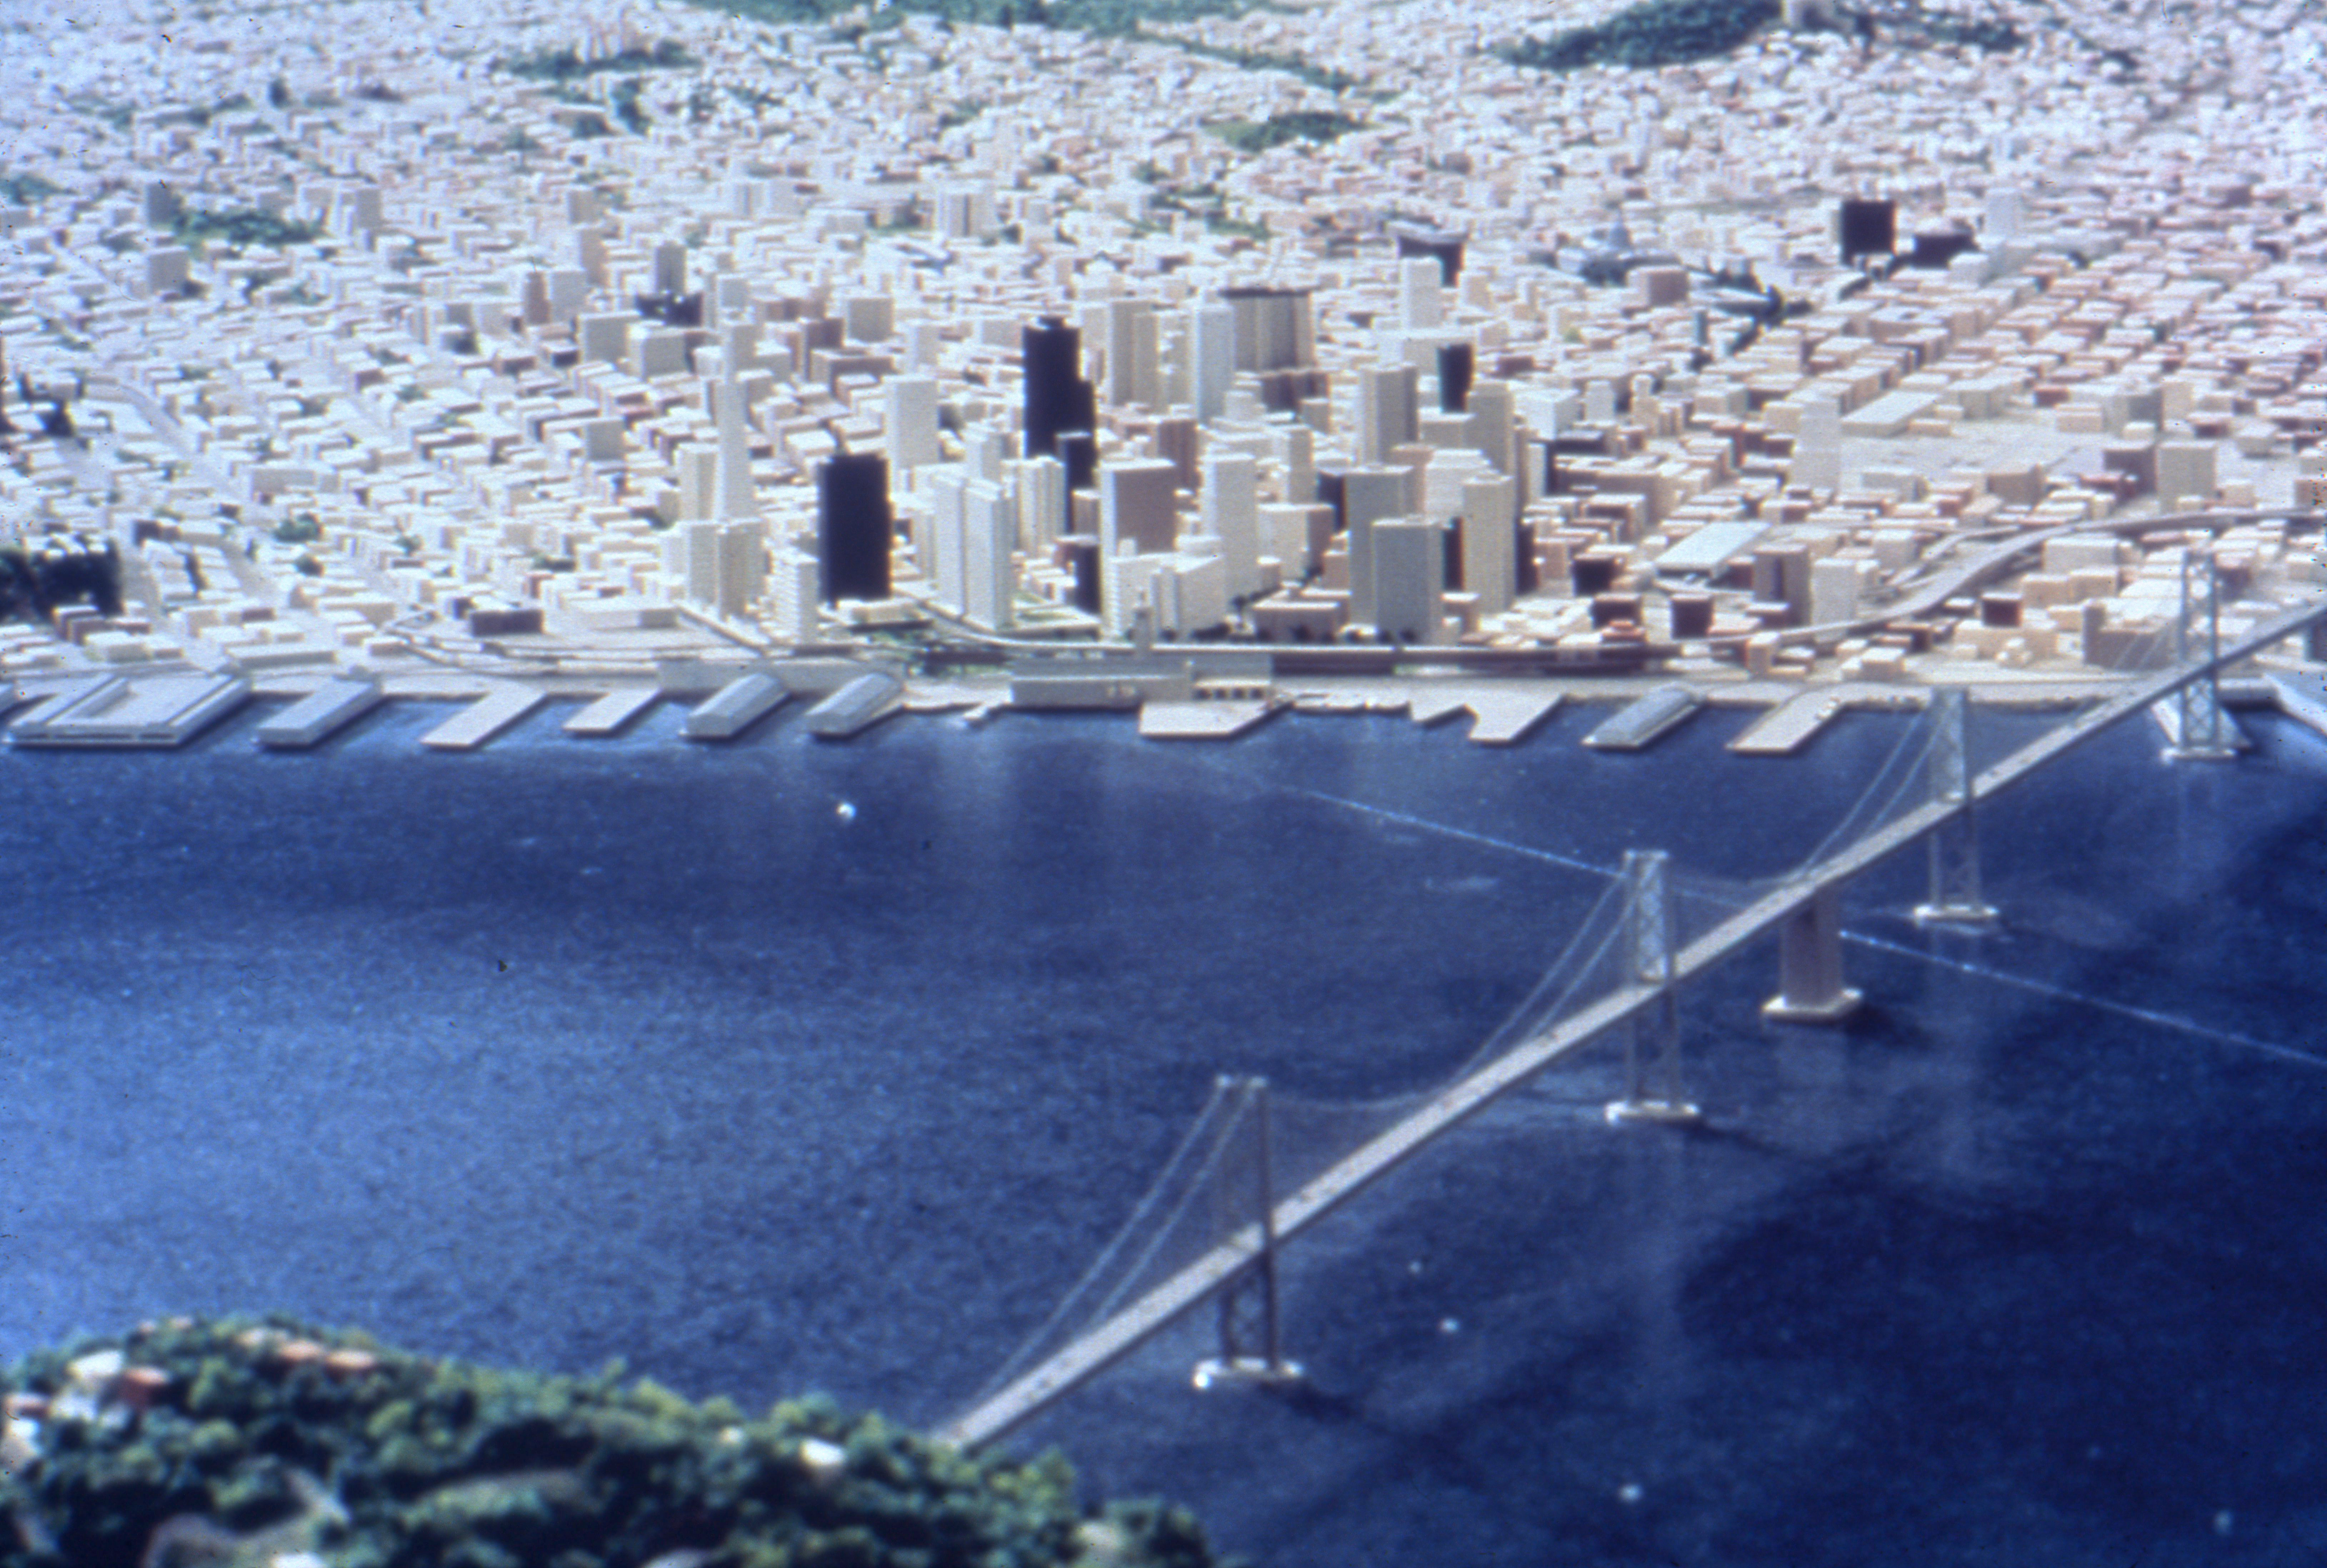 City of San Francisco - Image 6